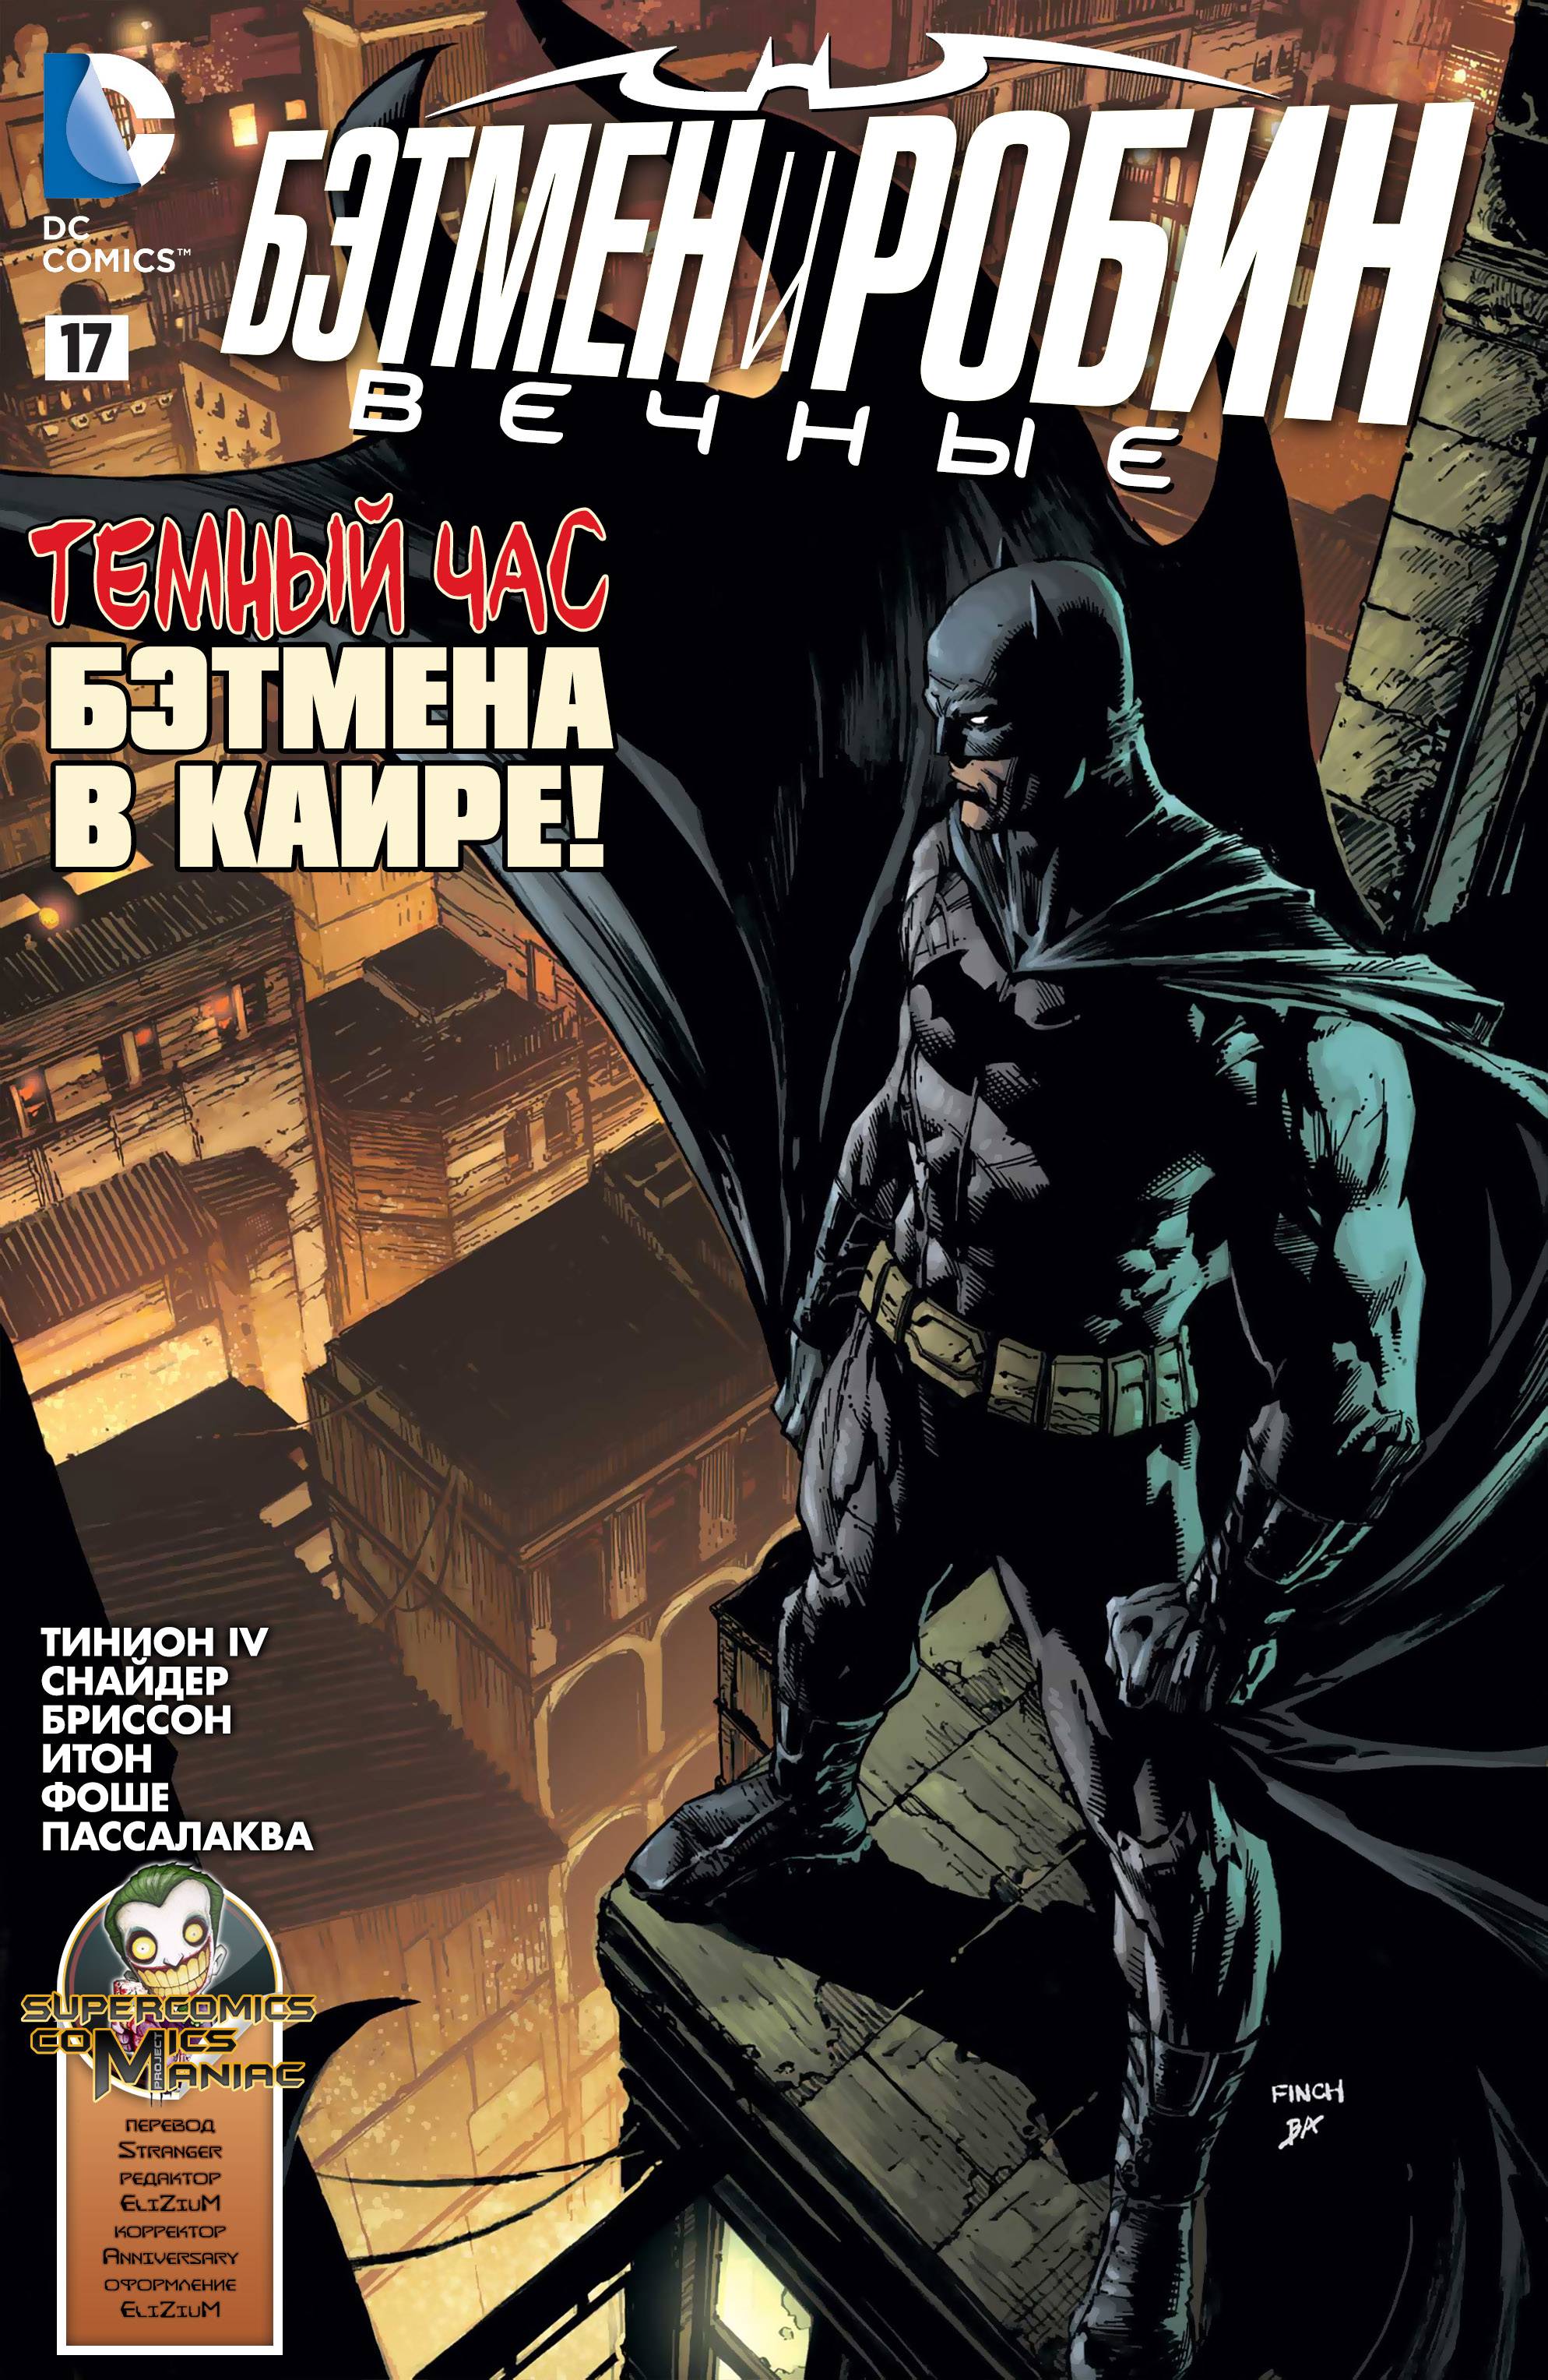 Бэтмен и Робин Вечные №17 онлайн